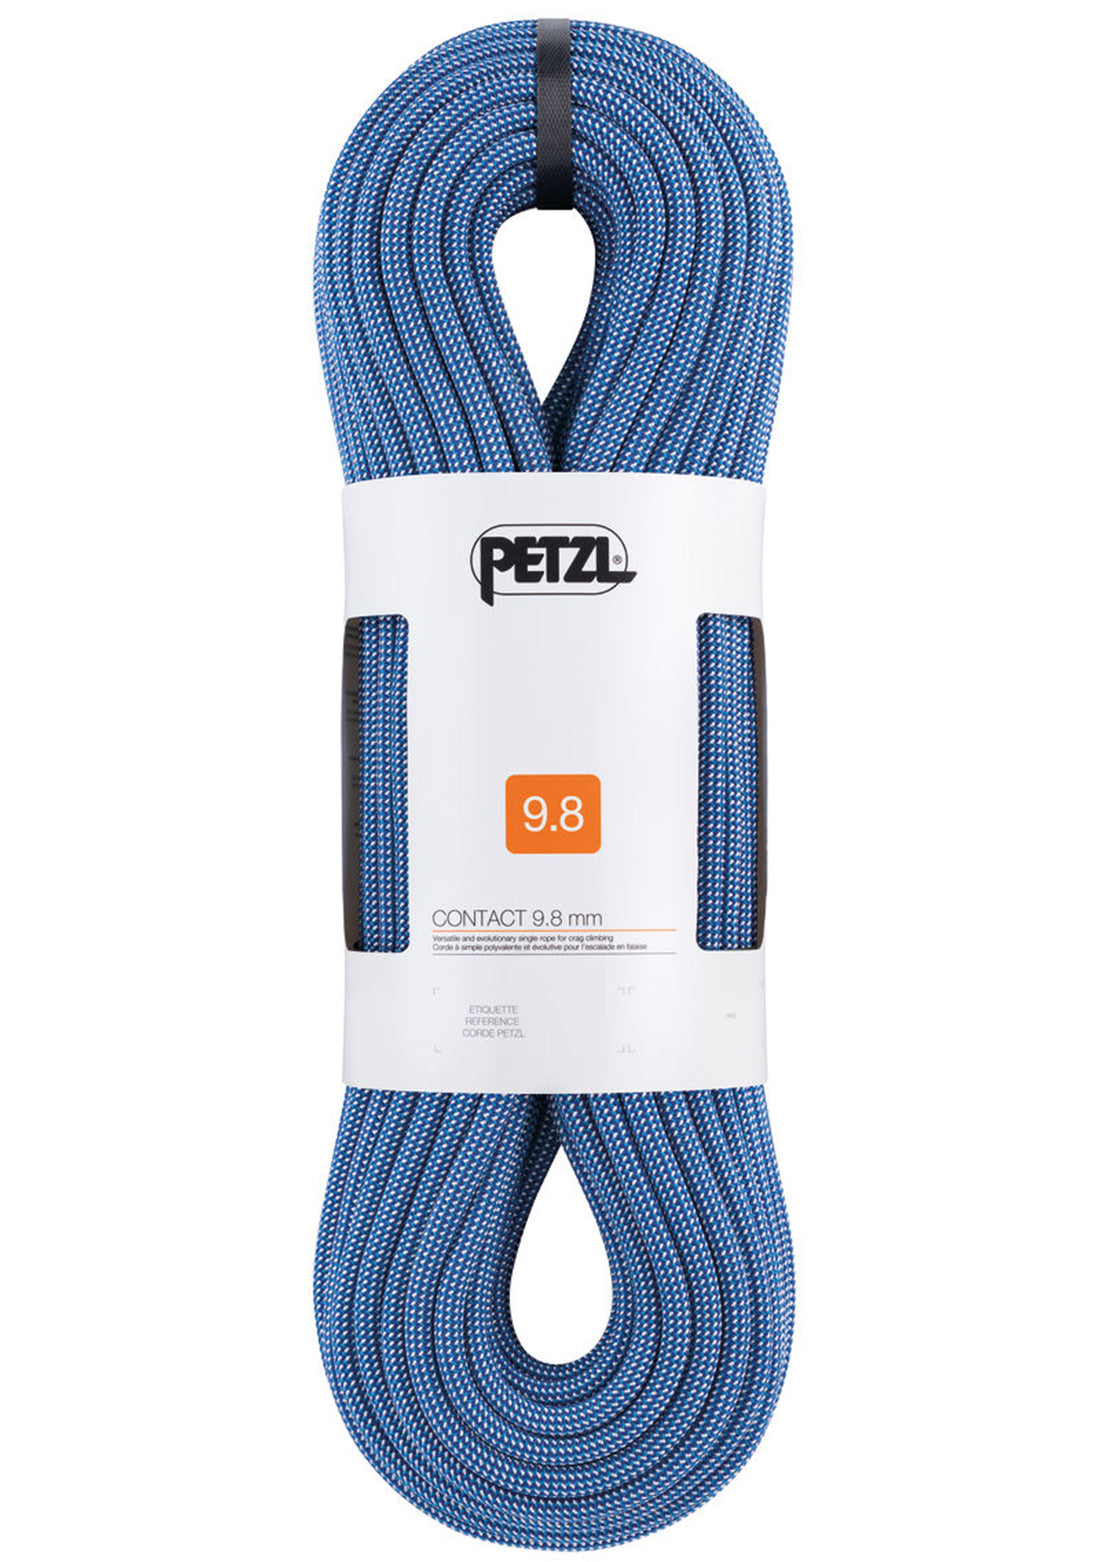 Petzl Contact 9.8mm Climbing Rope - 70m Blue